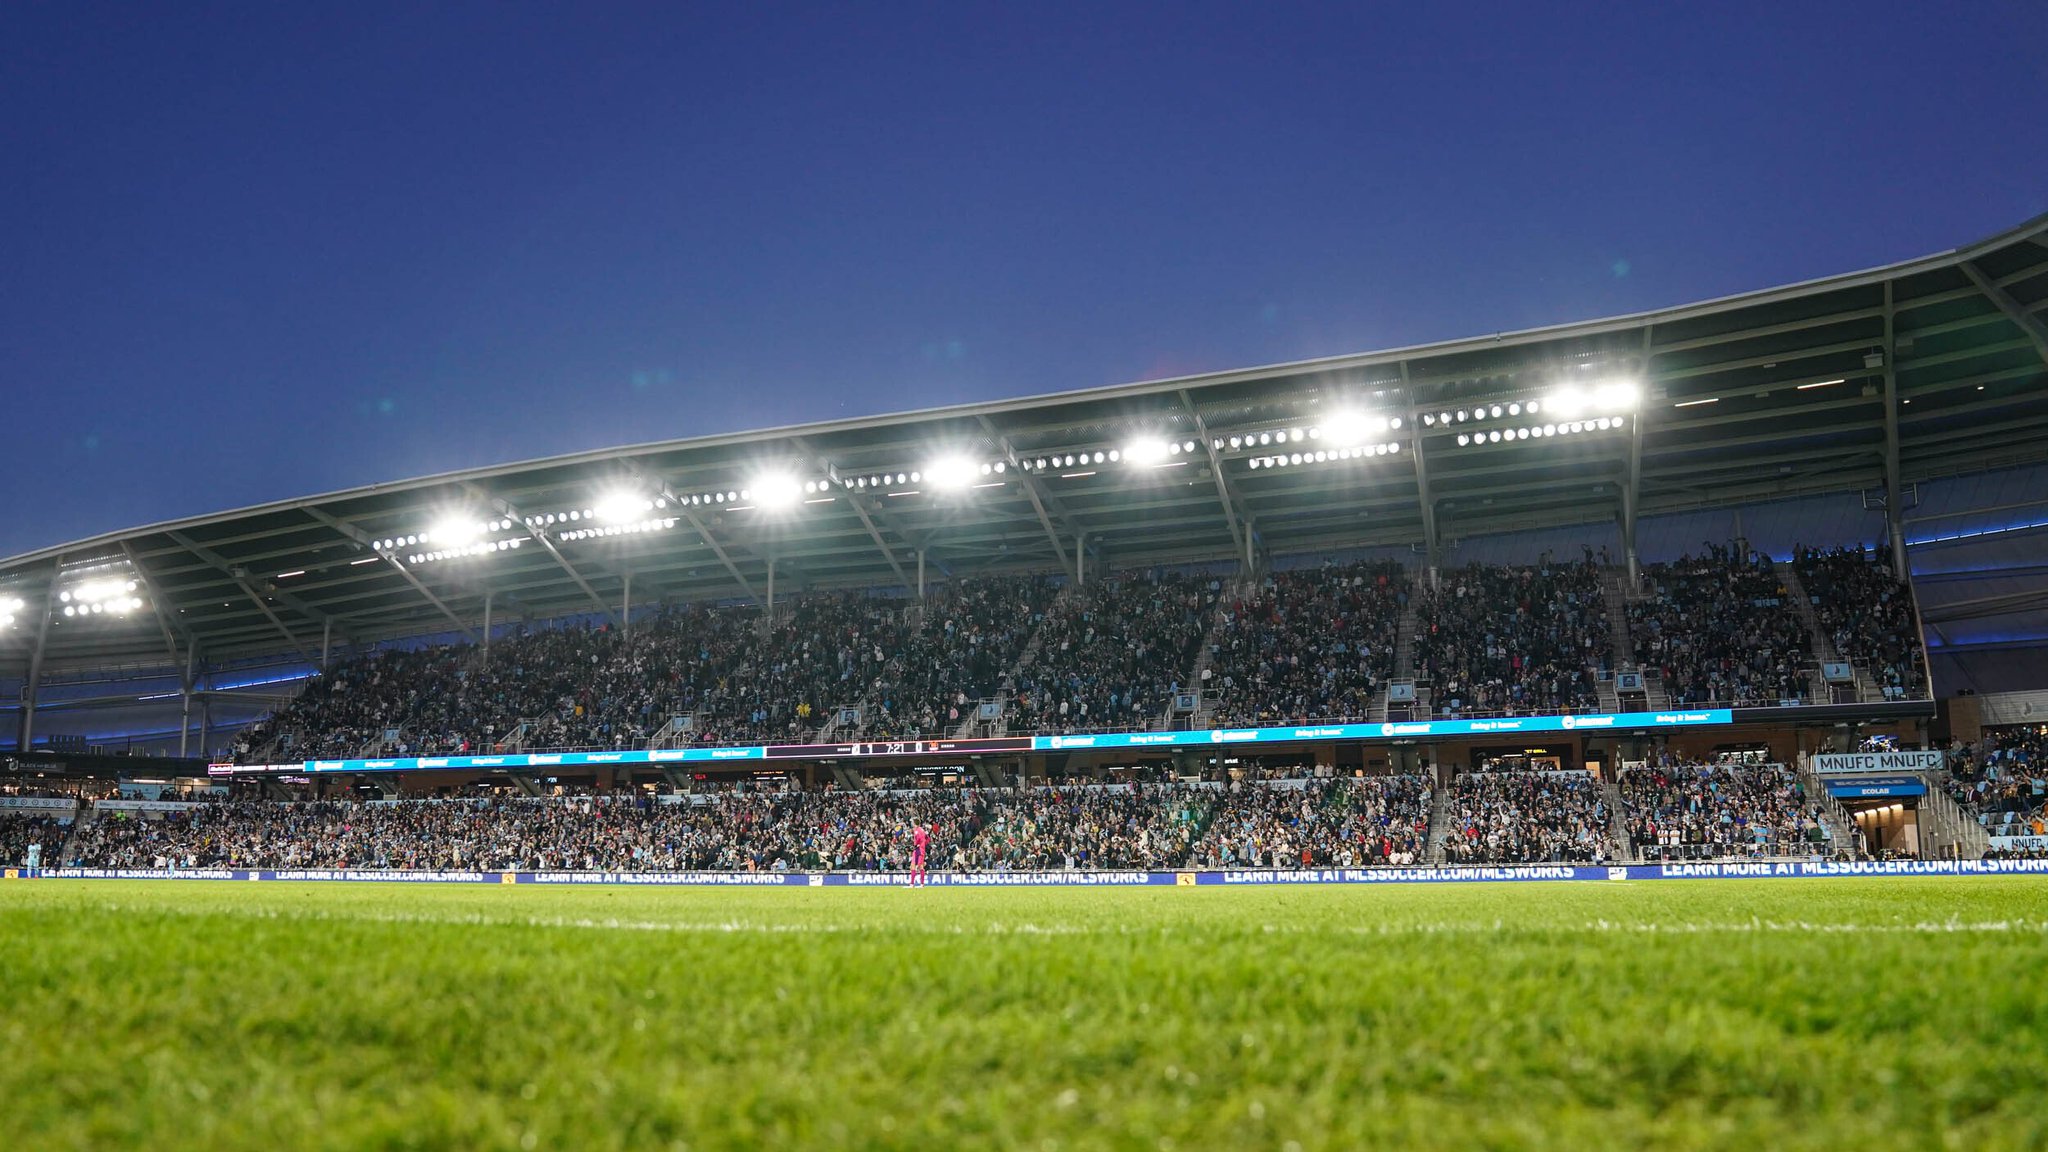 Minnesota United & Bell Bank Host Second-Annual Saint Paul Cup at Allianz  Field